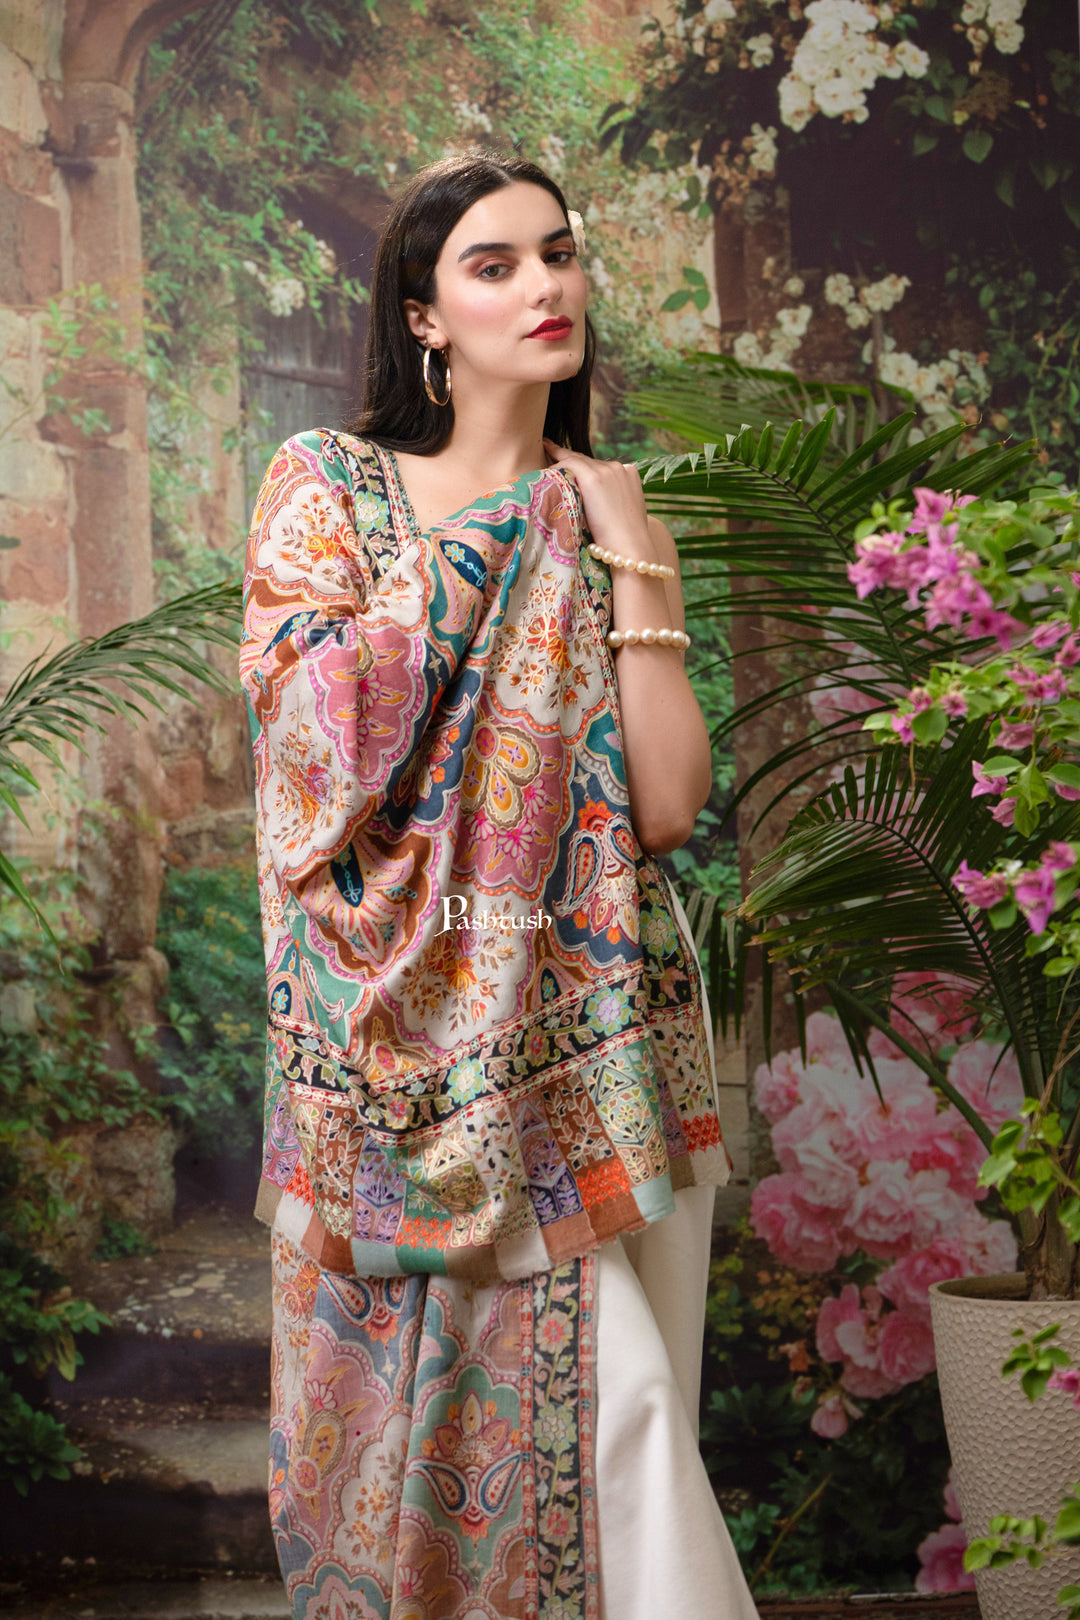 Pashtush India Womens Shawls Pashtush Womens Shawl, Fine Wool, Hand Embroidery, Kalamkari Design, Multicolour, Soft and Warm